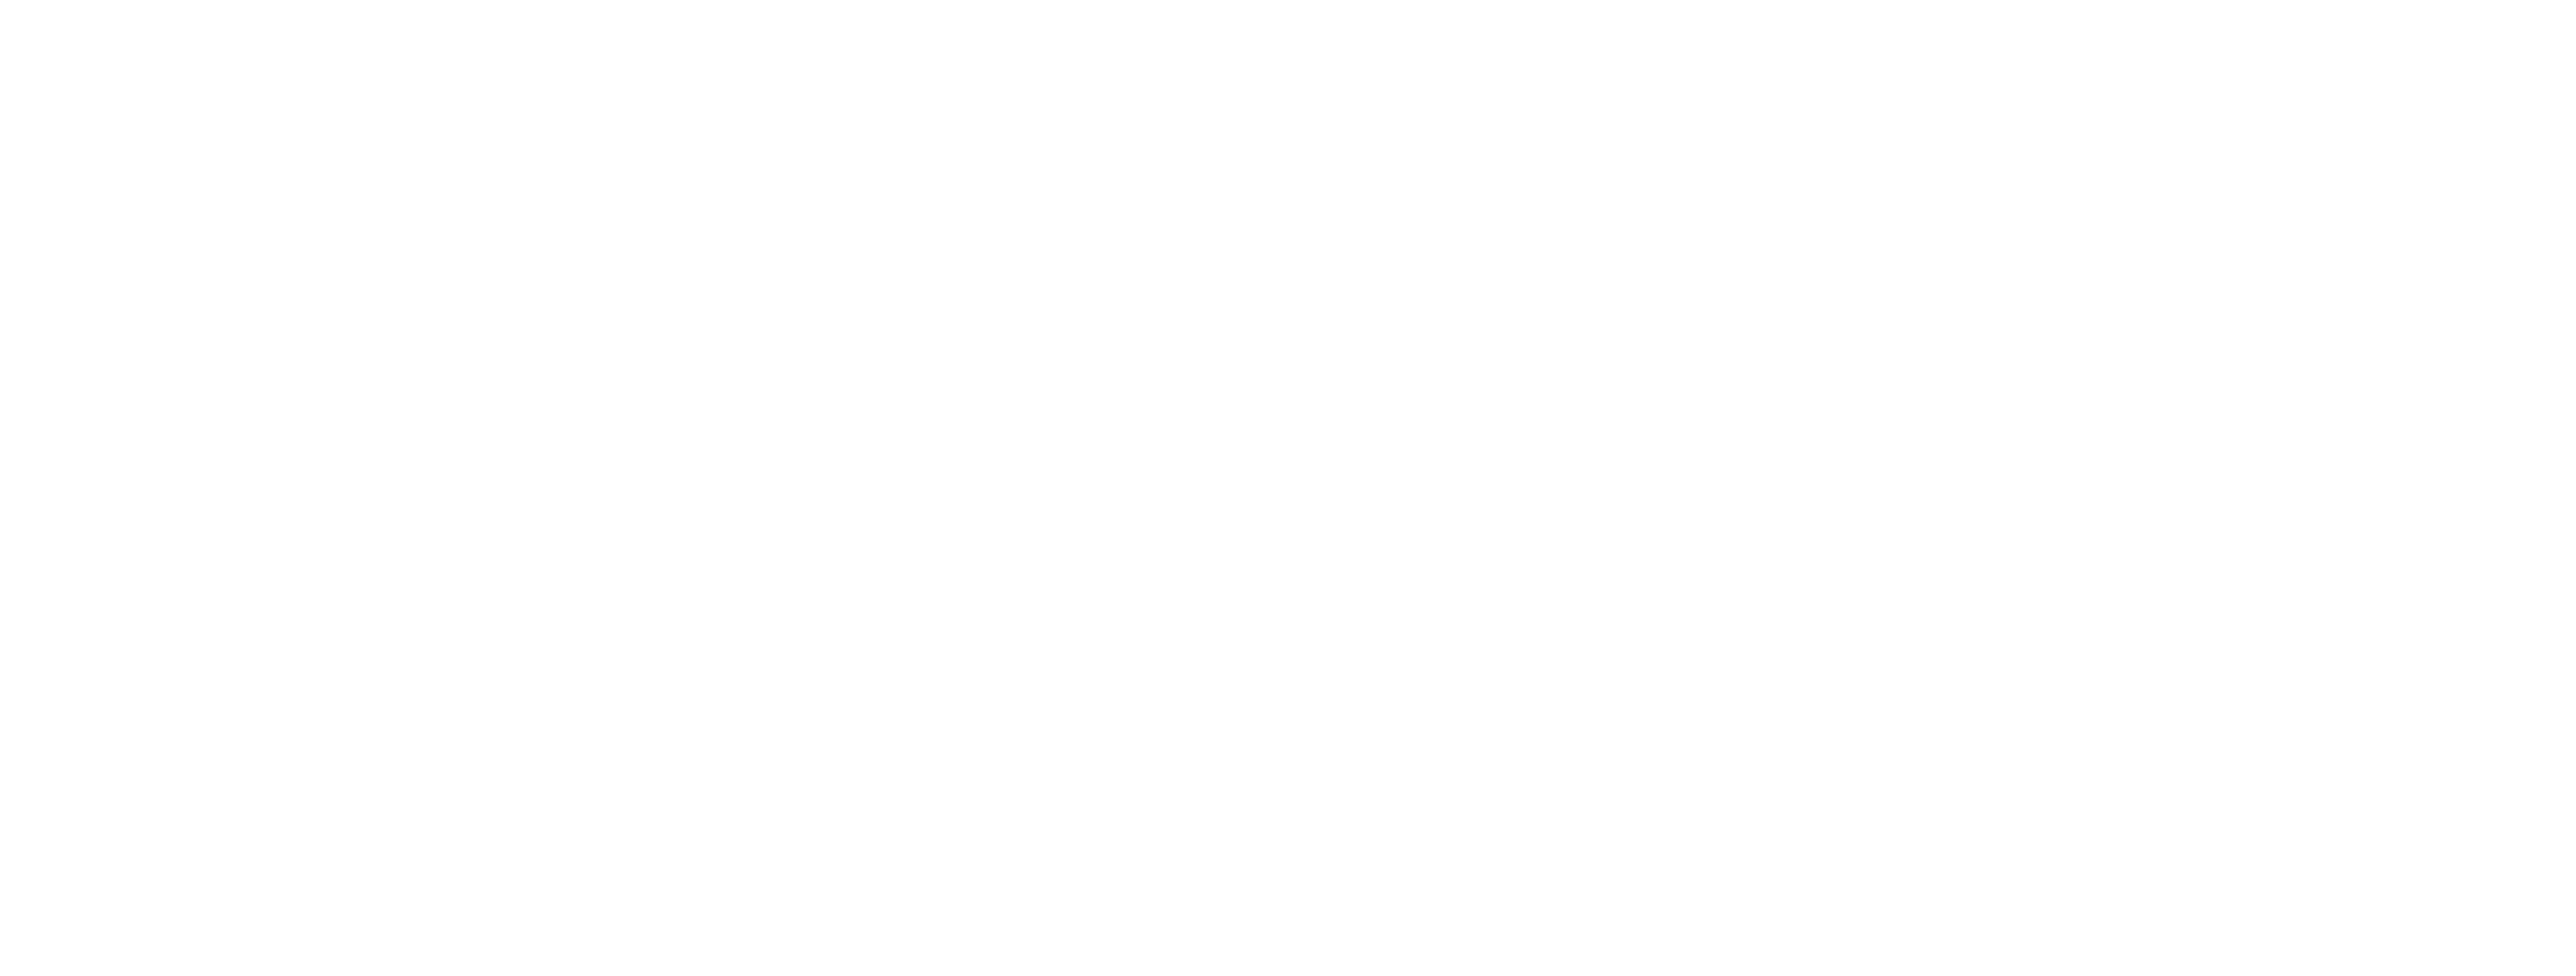 Universidad de Playa Ancha acreditada 2022 - 2027